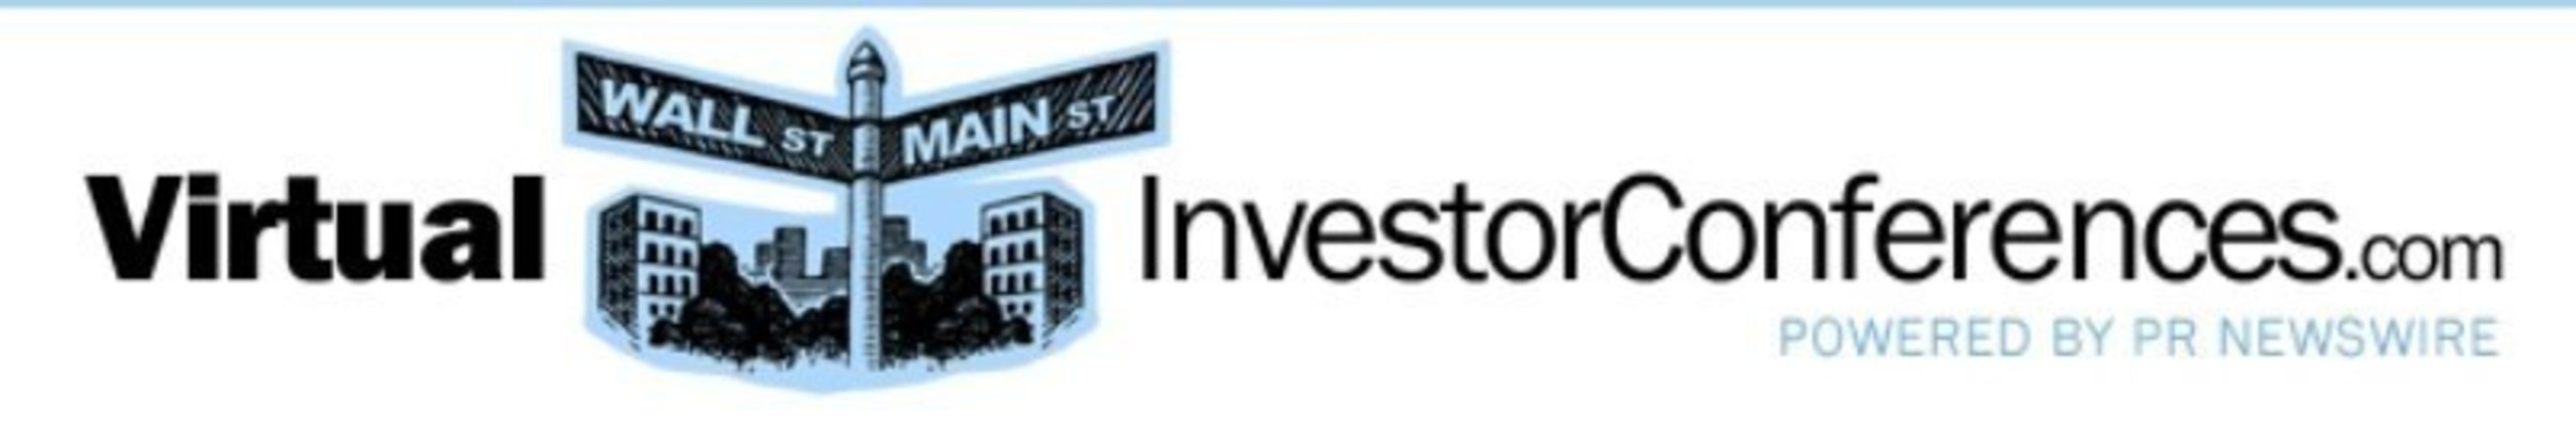 View investor presentations 24/7 at www.virtualinvestorconferences.com. (PRNewsFoto/OTC Markets Group Inc.)